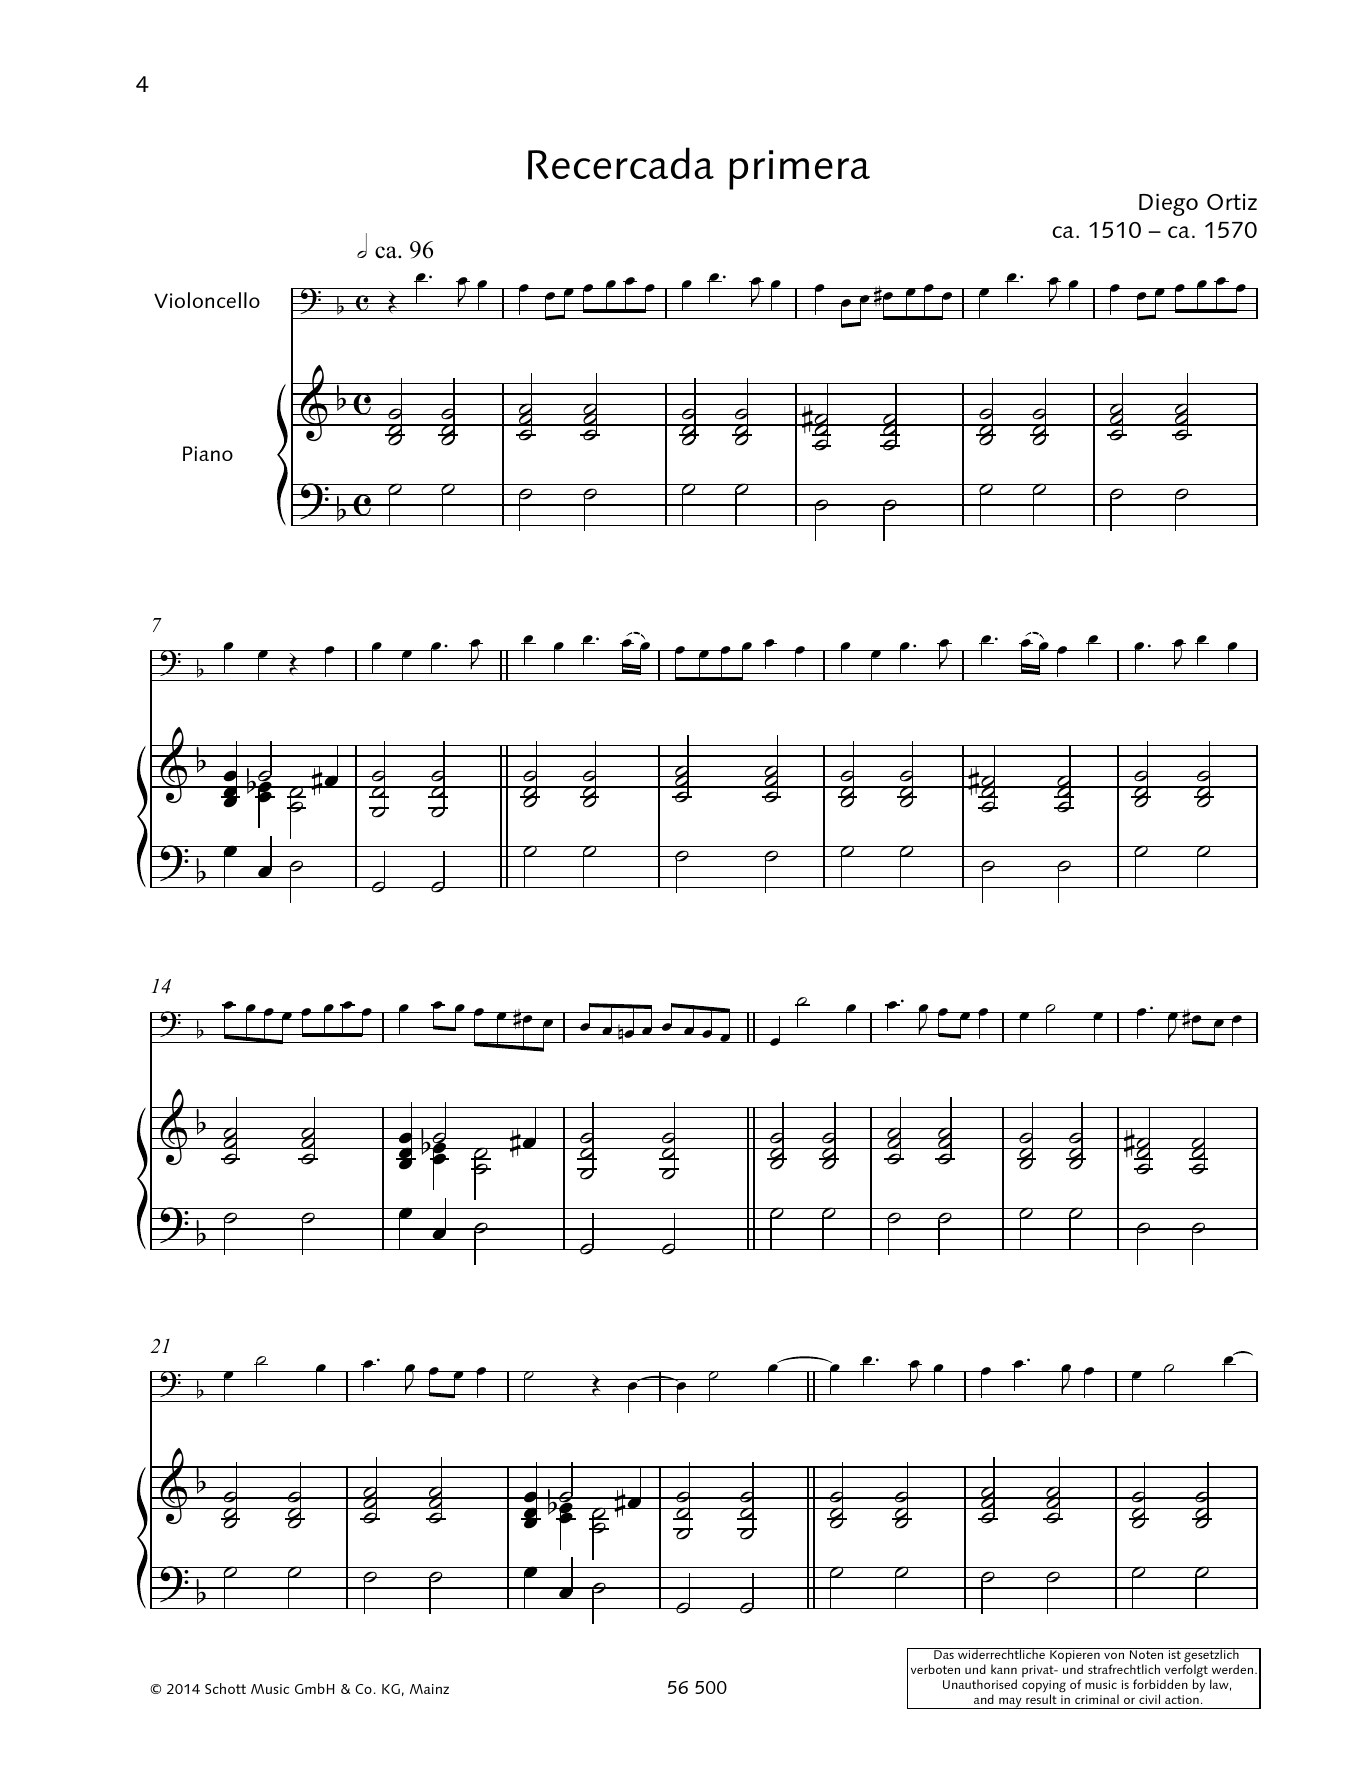 Diego Ortiz Recercada primera sheet music notes and chords. Download Printable PDF.